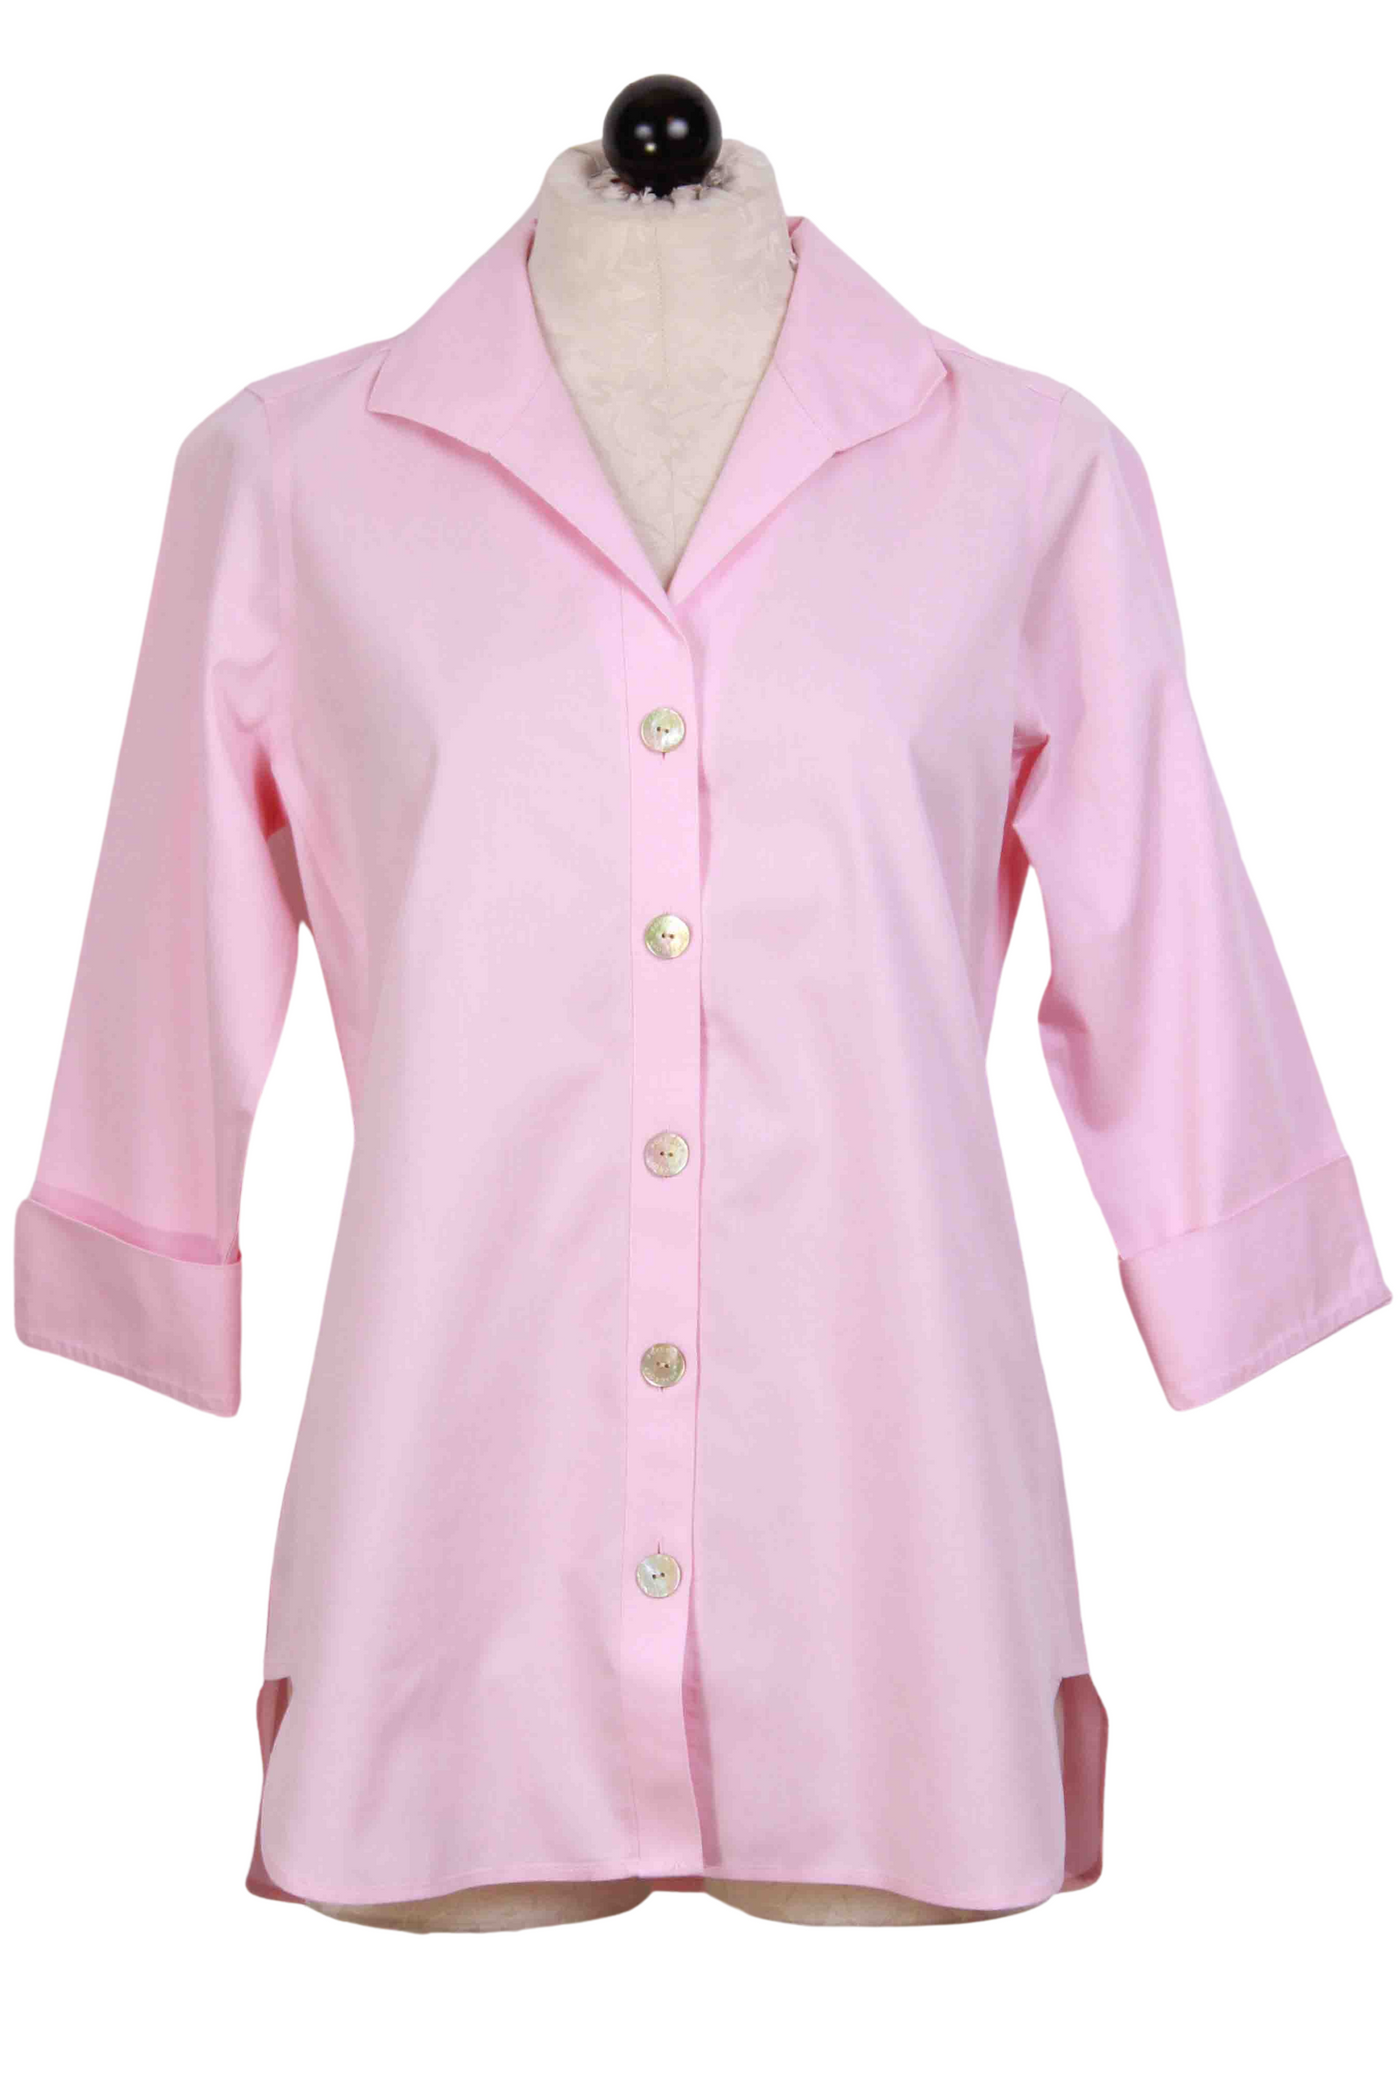 Classic Chambray Pink 3/4 Sleeve Tunic Style Pandora Blouse by Foxcroft